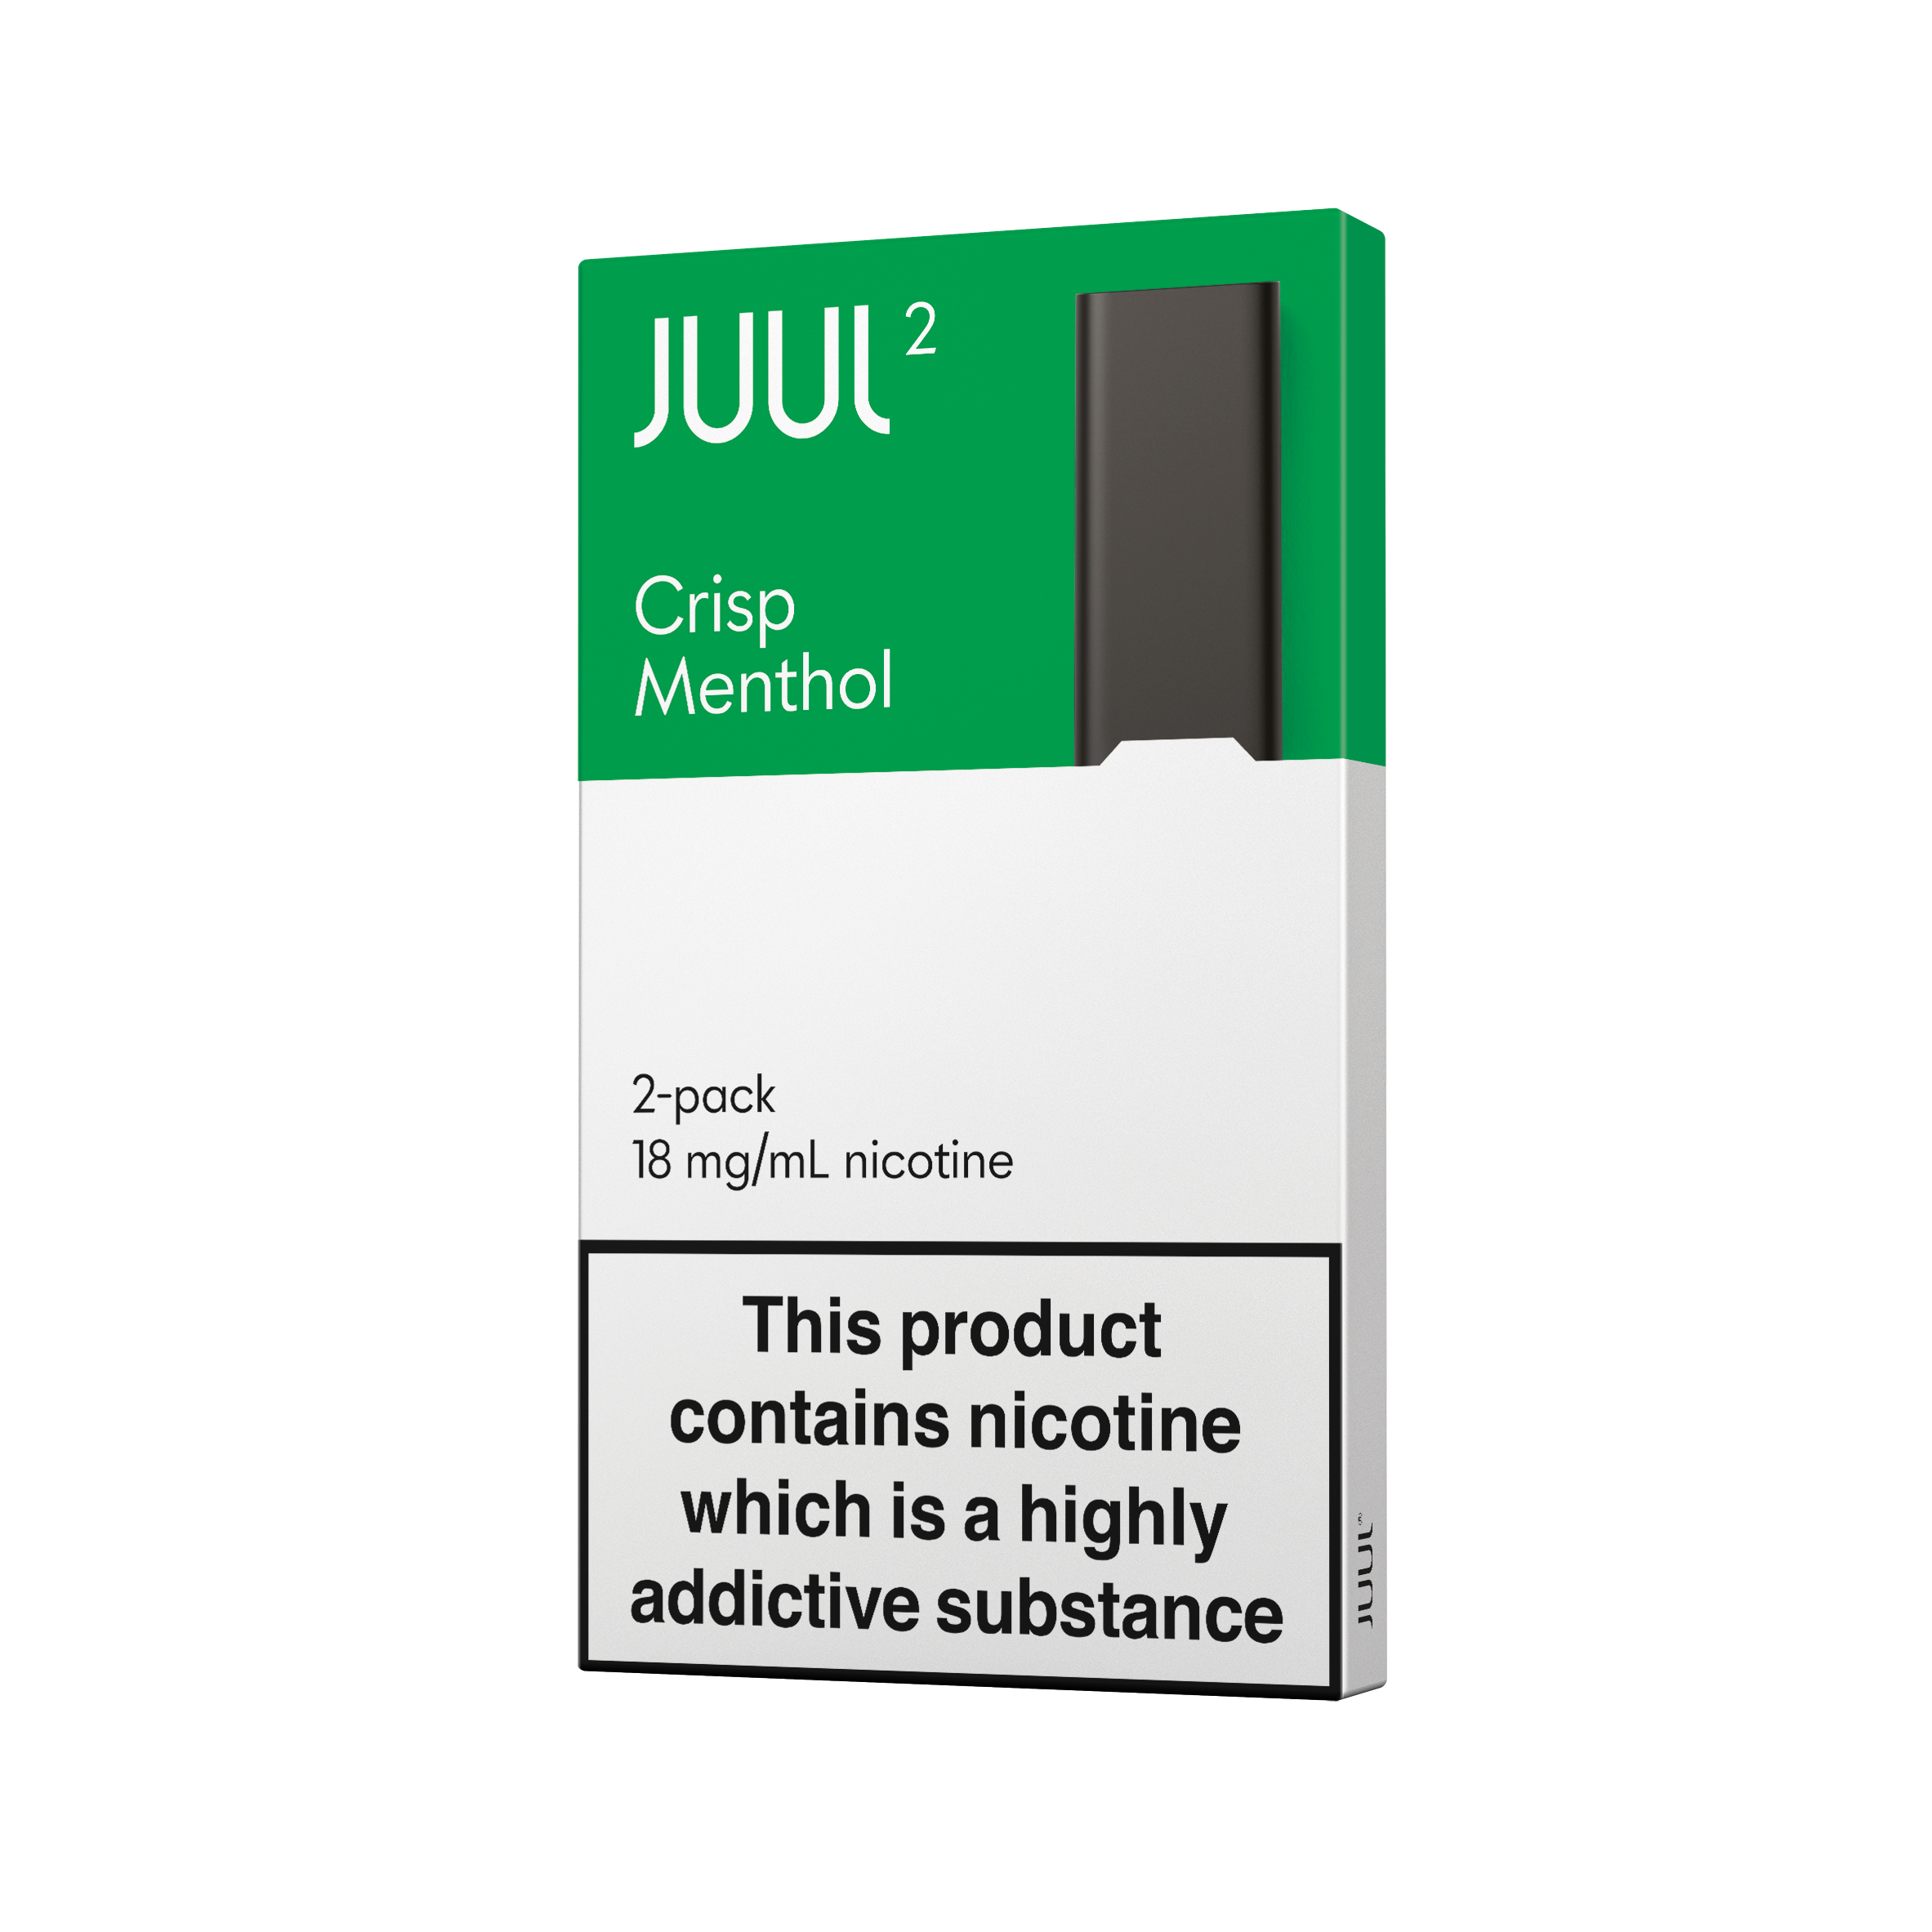 Juul Labs launches next-gen Juul2 system across UK retail